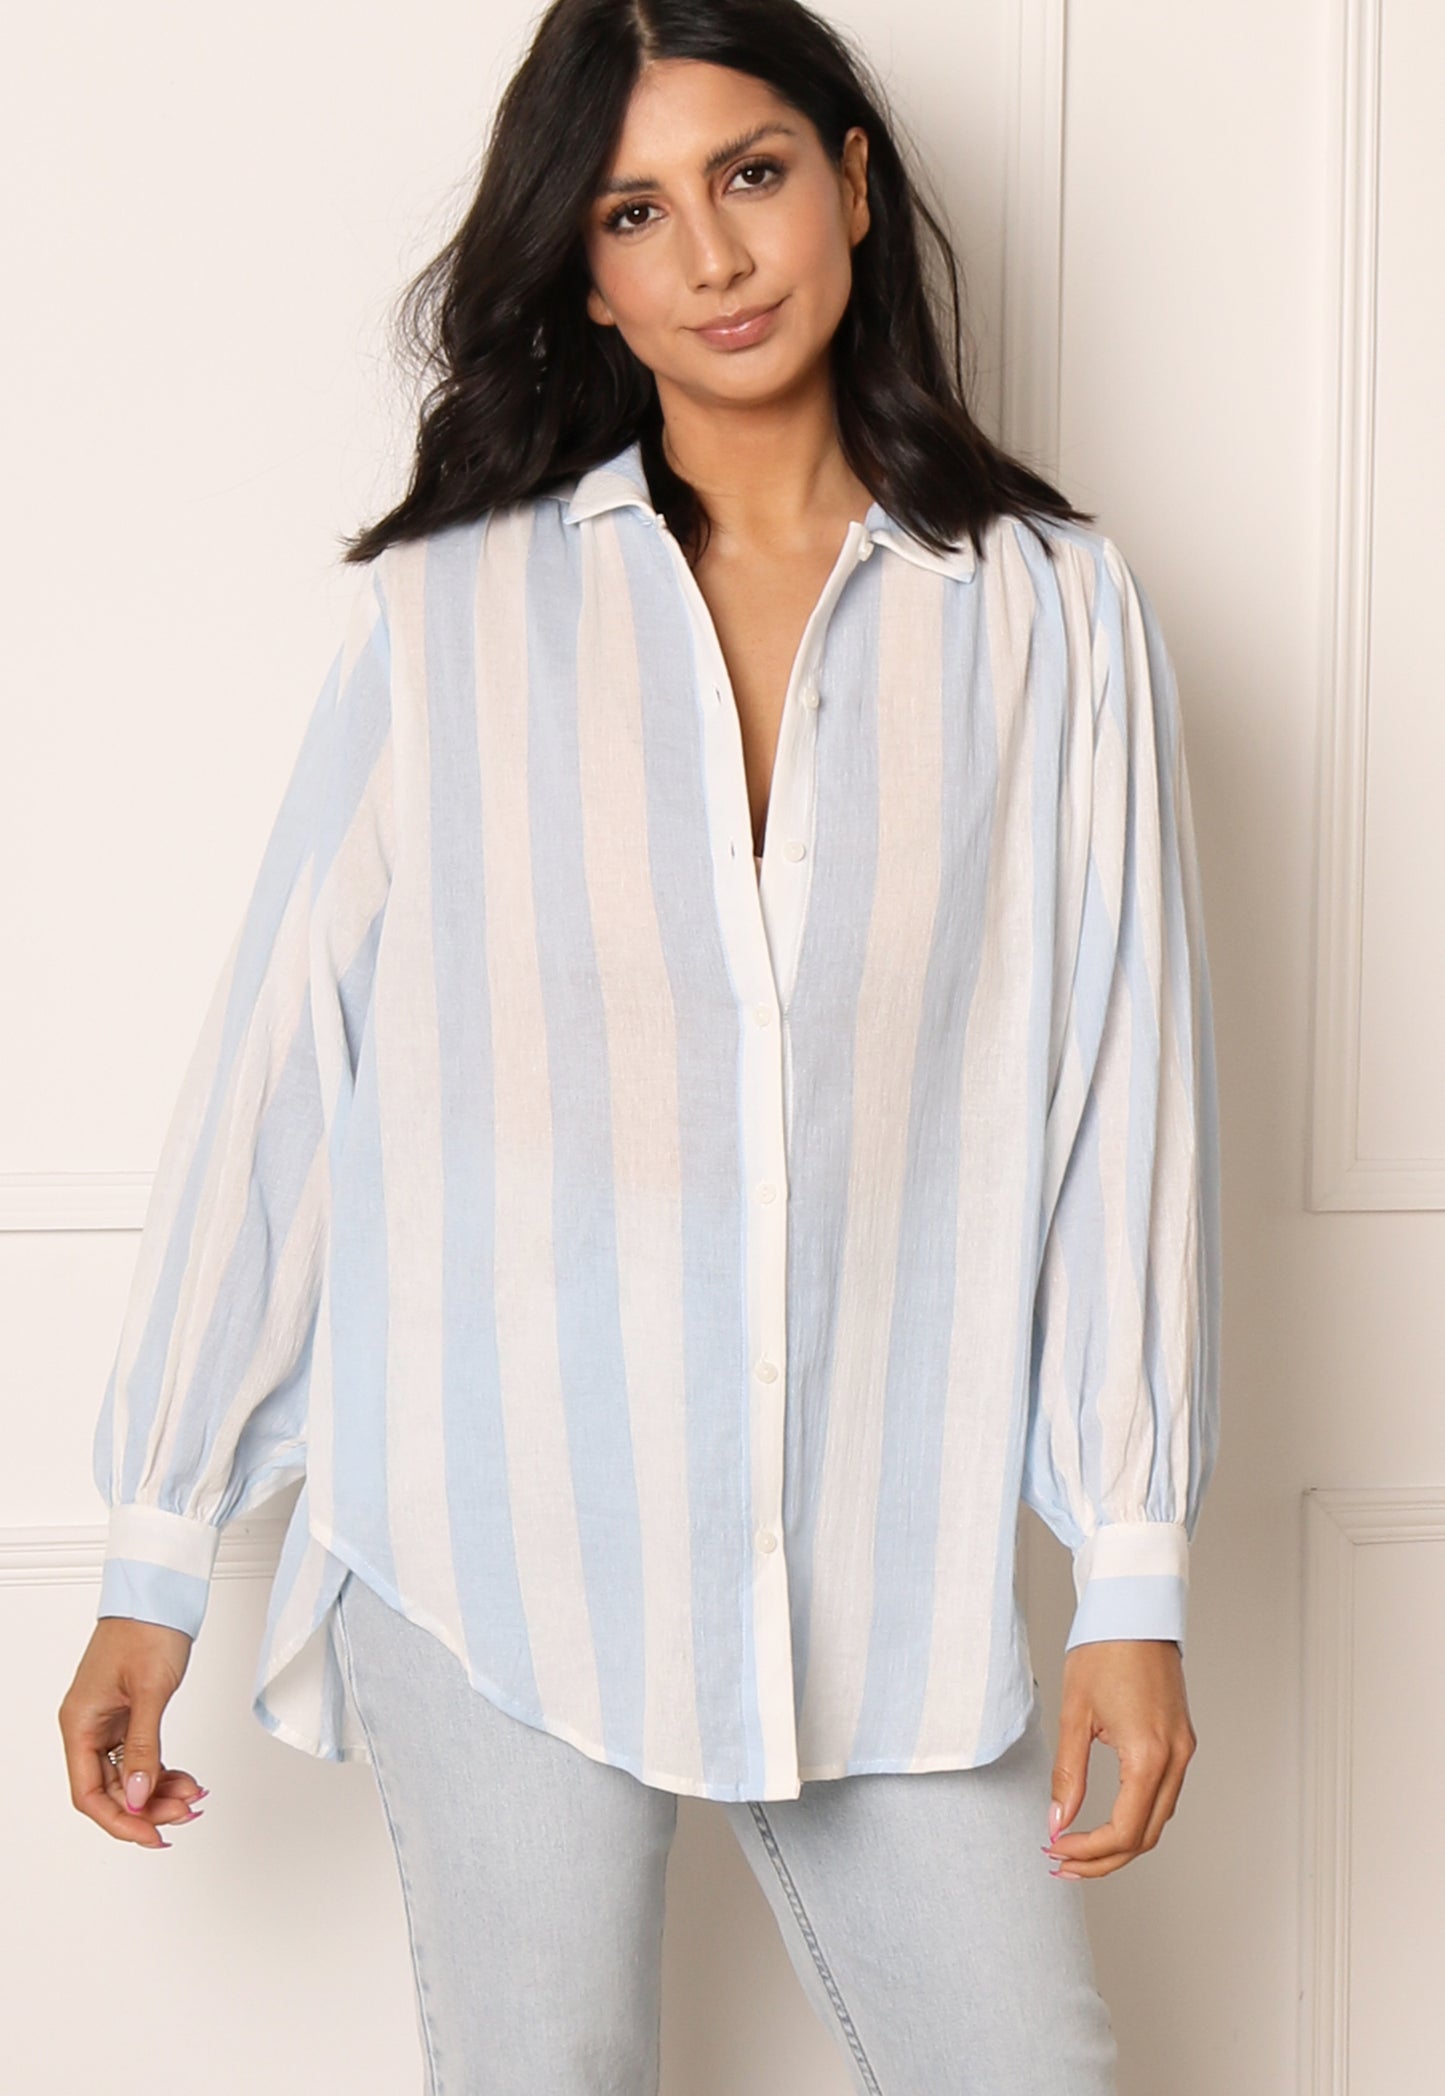 VILA Stripe Lightweight Oversized Cotton Shirt in Blue & White - concretebartops